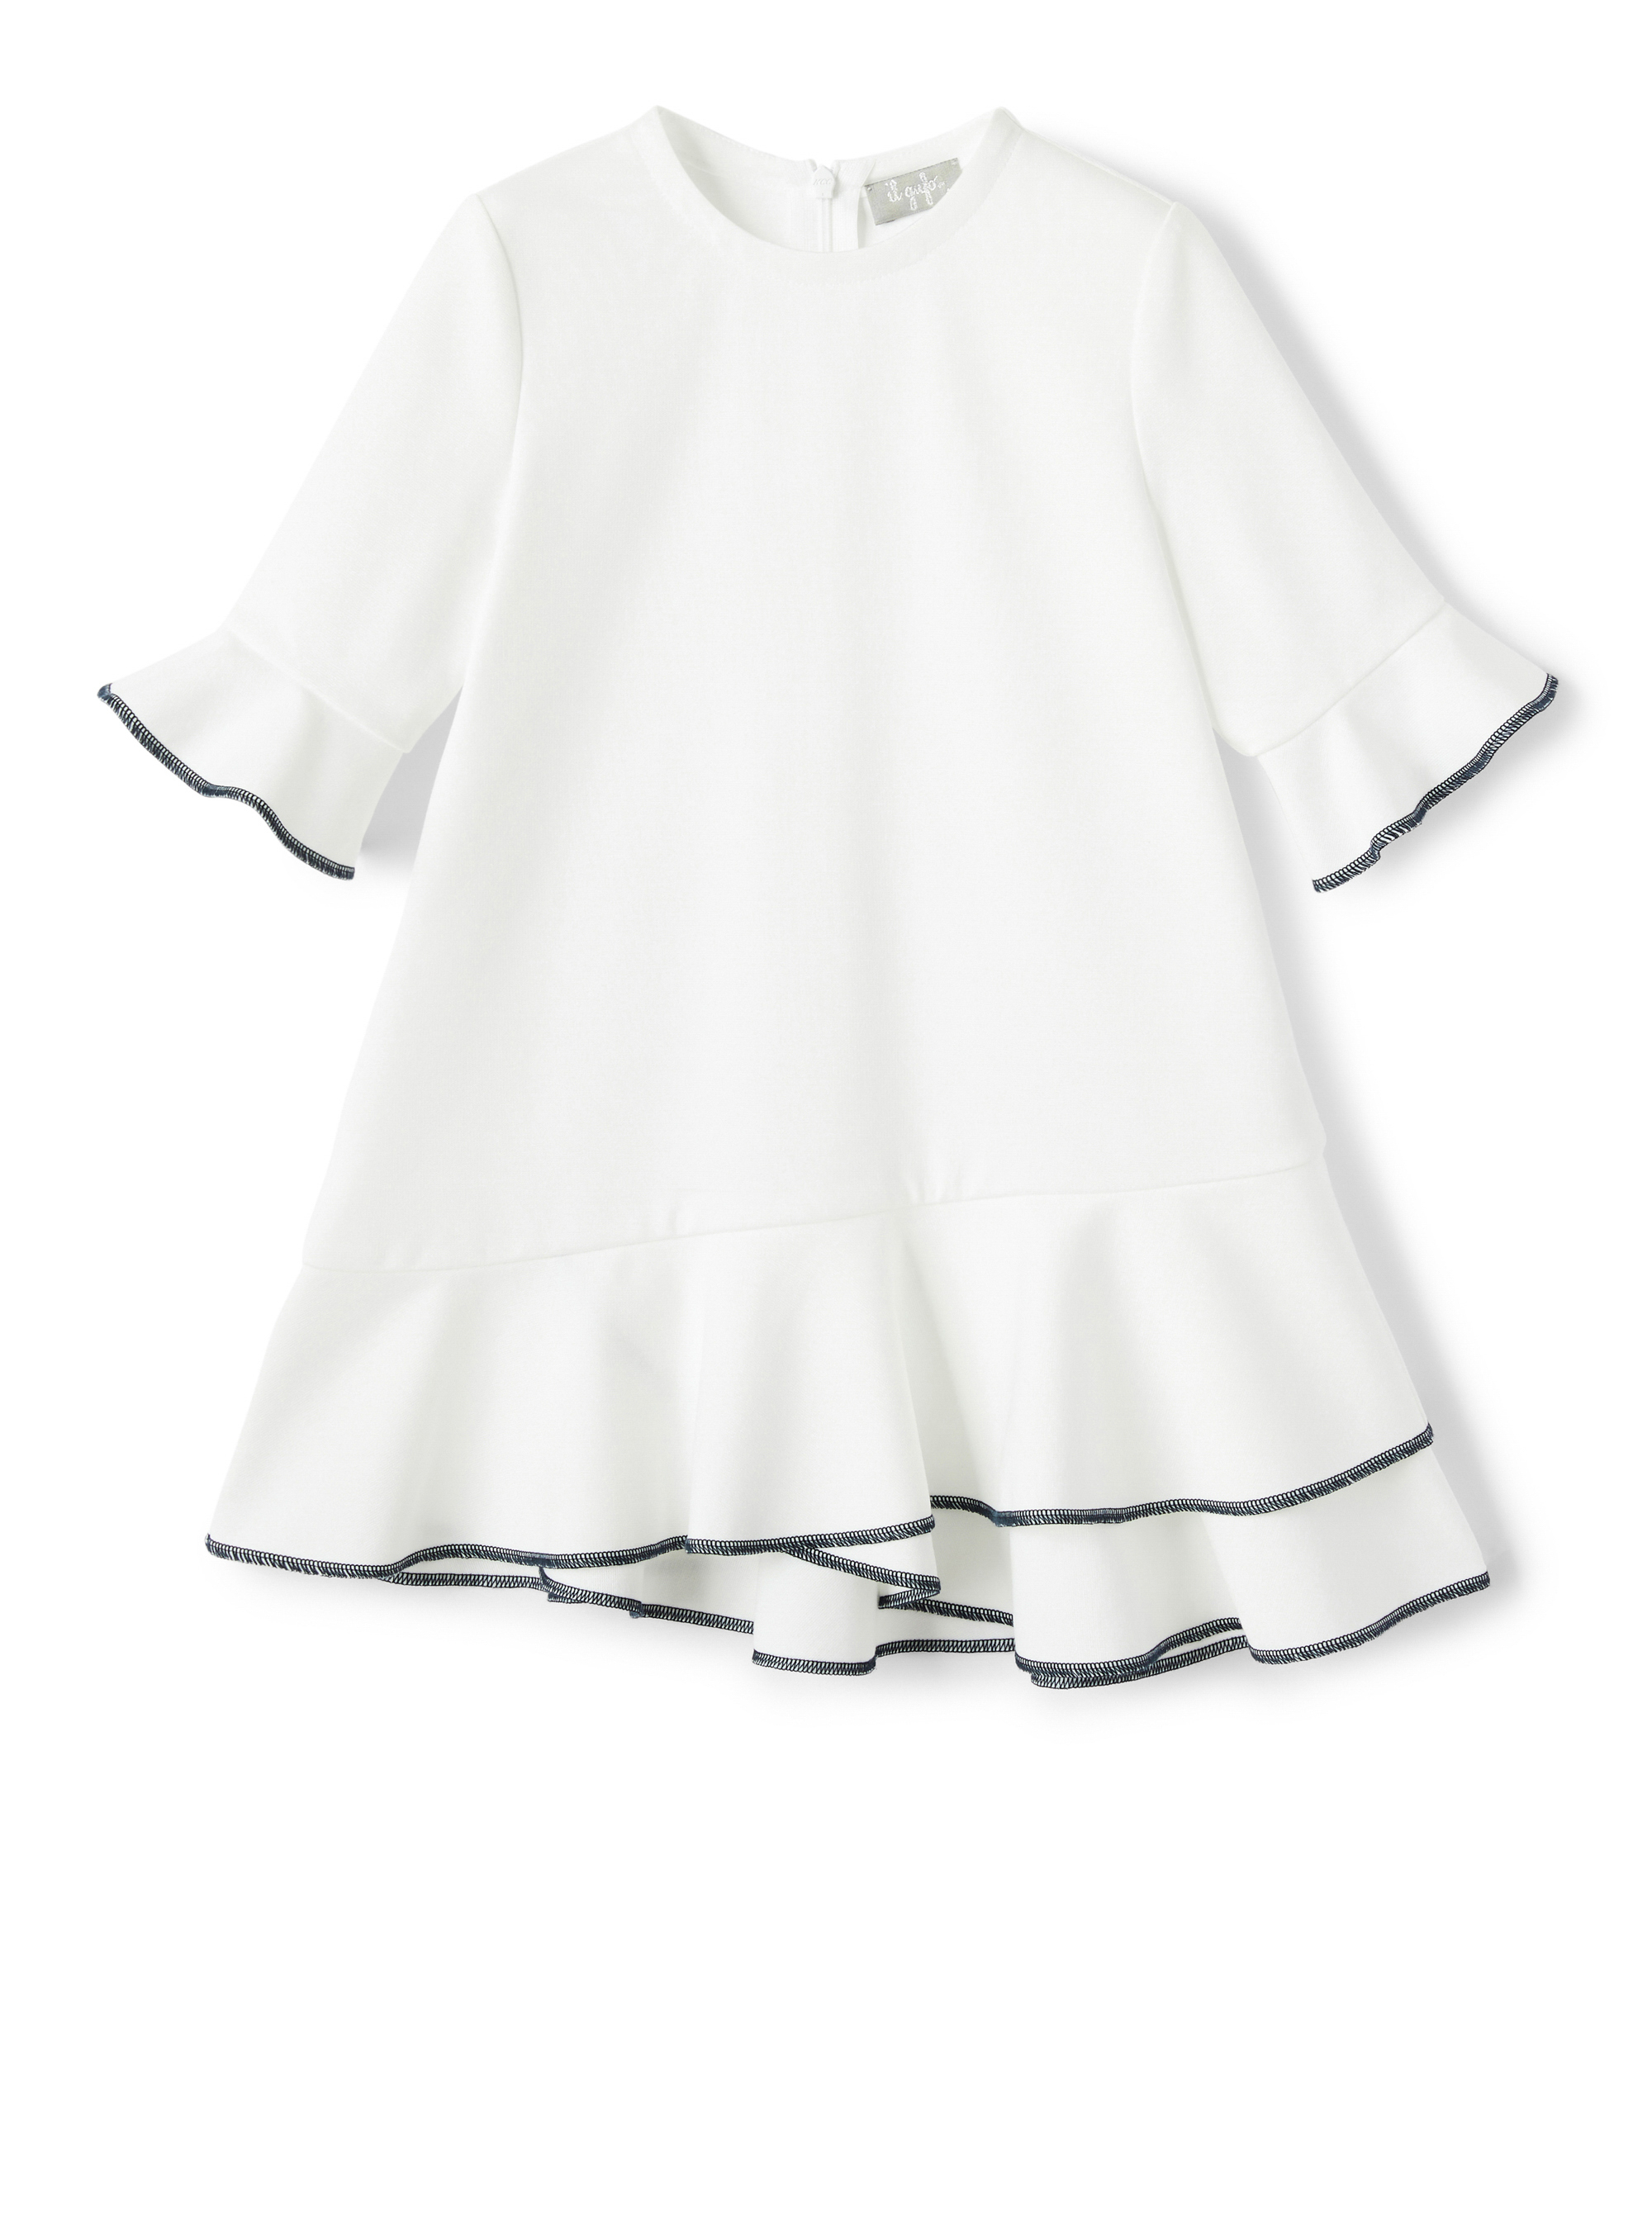 Rome stitch dress with flounces - Dresses - Il Gufo